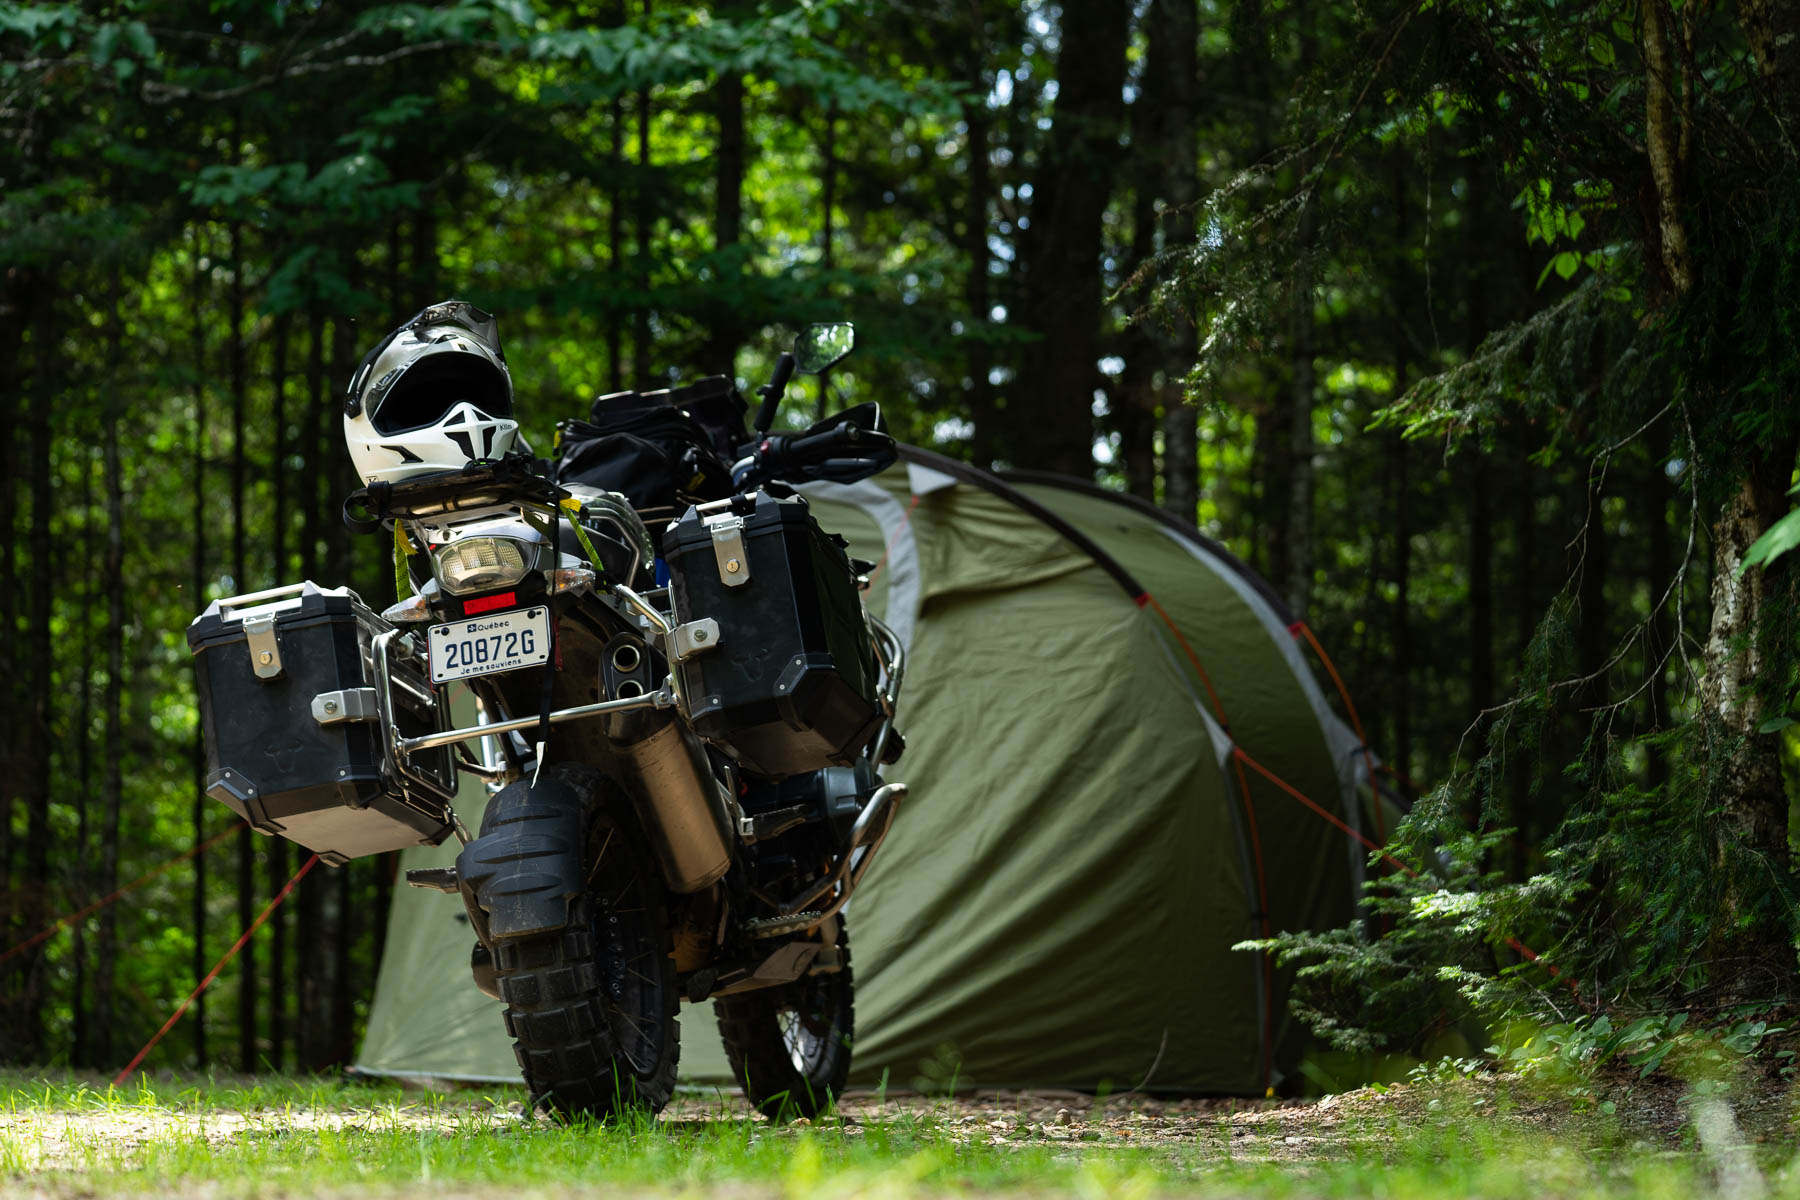 Moto-aventure BMW GS équipée pour le voyage, l'aventure et le camping - Adventure bike equiped for travel, camping and off-road.